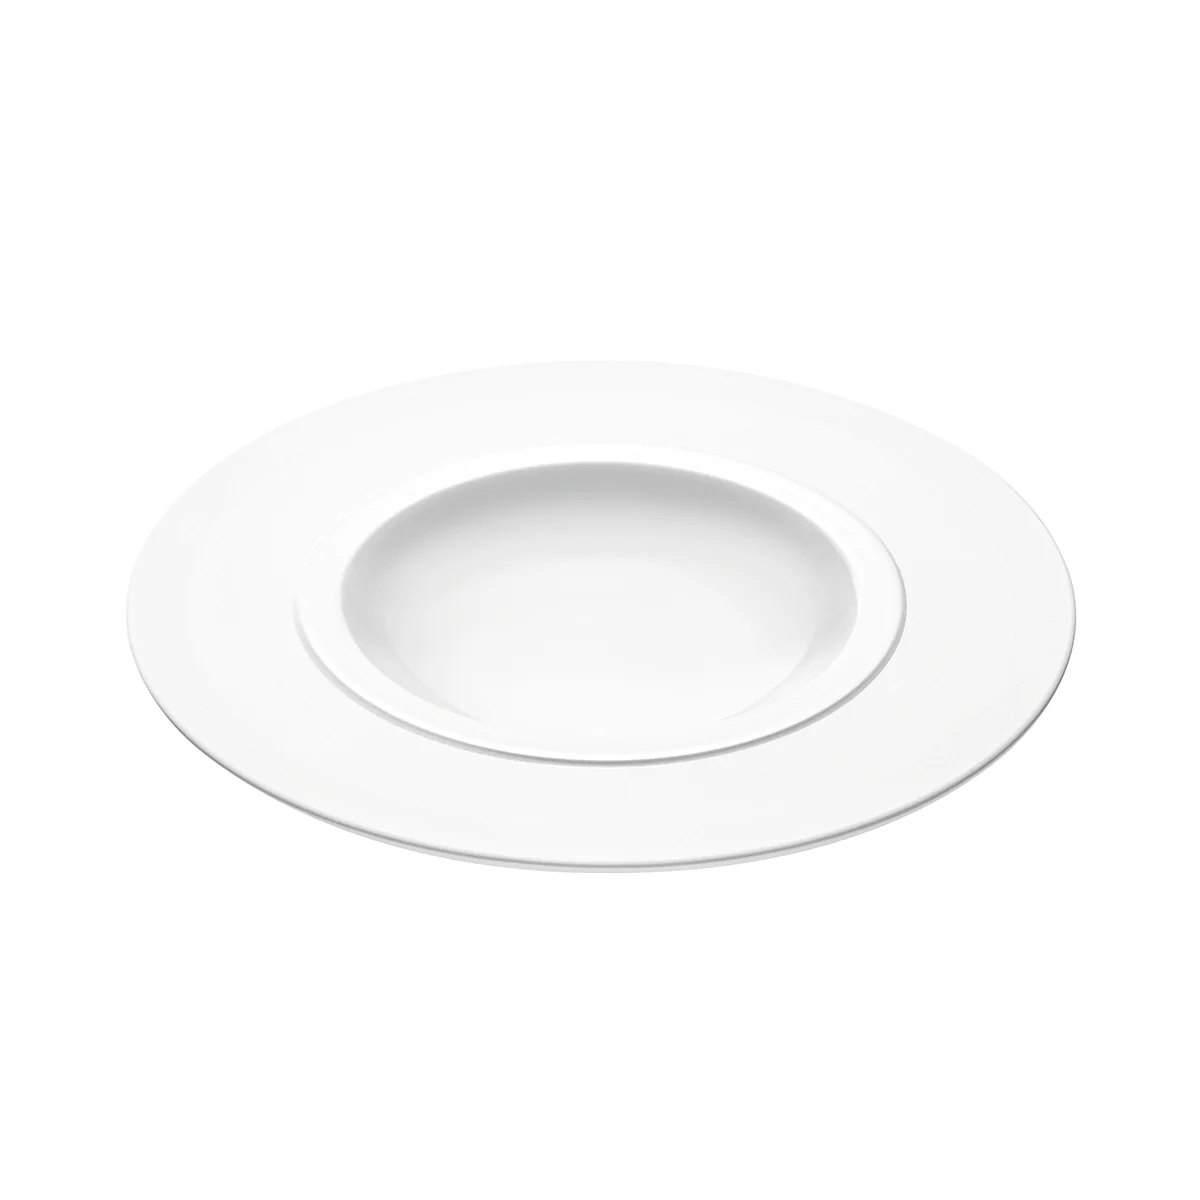 Large bowl Degrenne Bahia Pierre de Lune gourmet plate 26 cm White